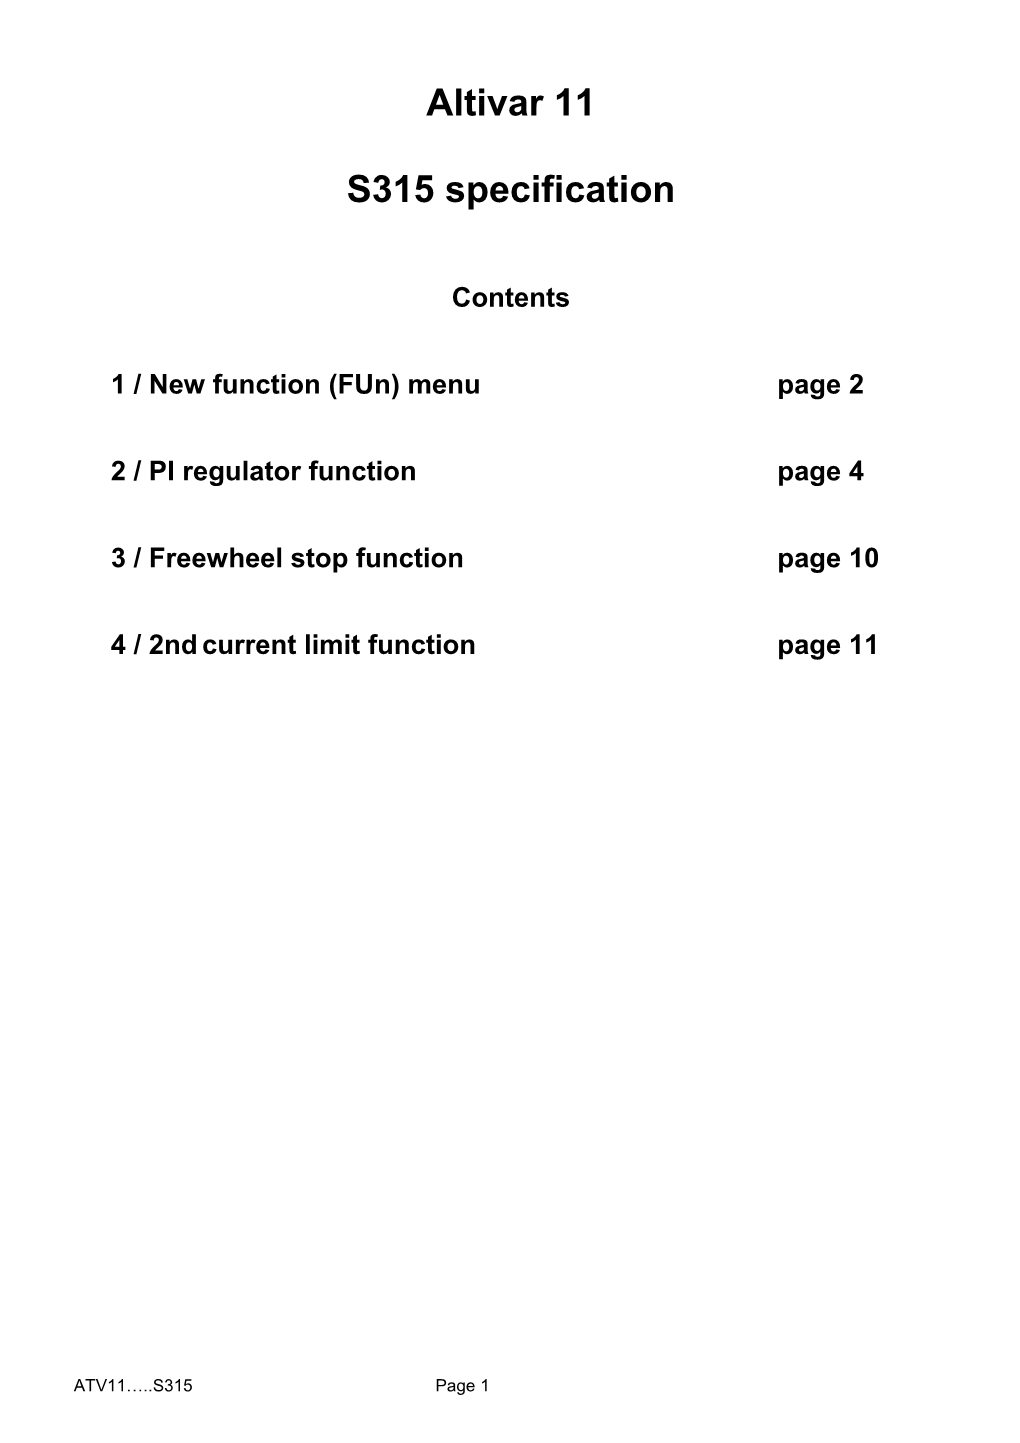 1 / New Function (Fun) Menu Page 2